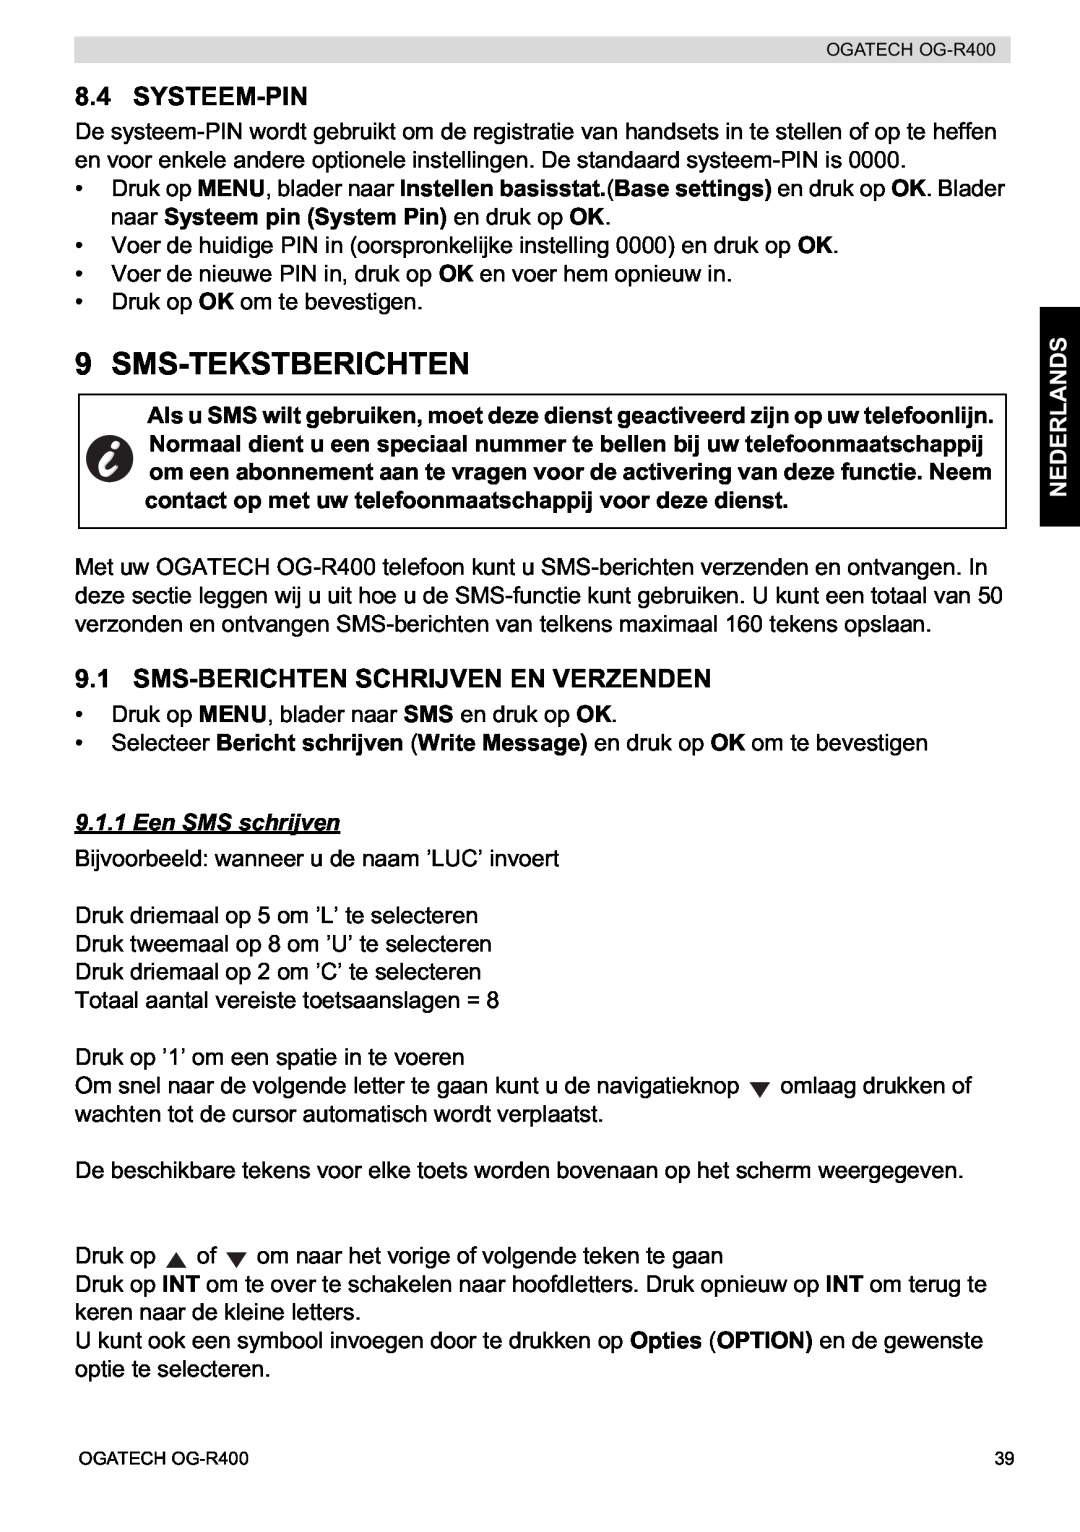 Topcom OG-R400 manual Sms-Tekstberichten, Systeem-Pin, Sms-Berichten Schrijven En Verzenden, Een SMS schrijven, Nederlands 